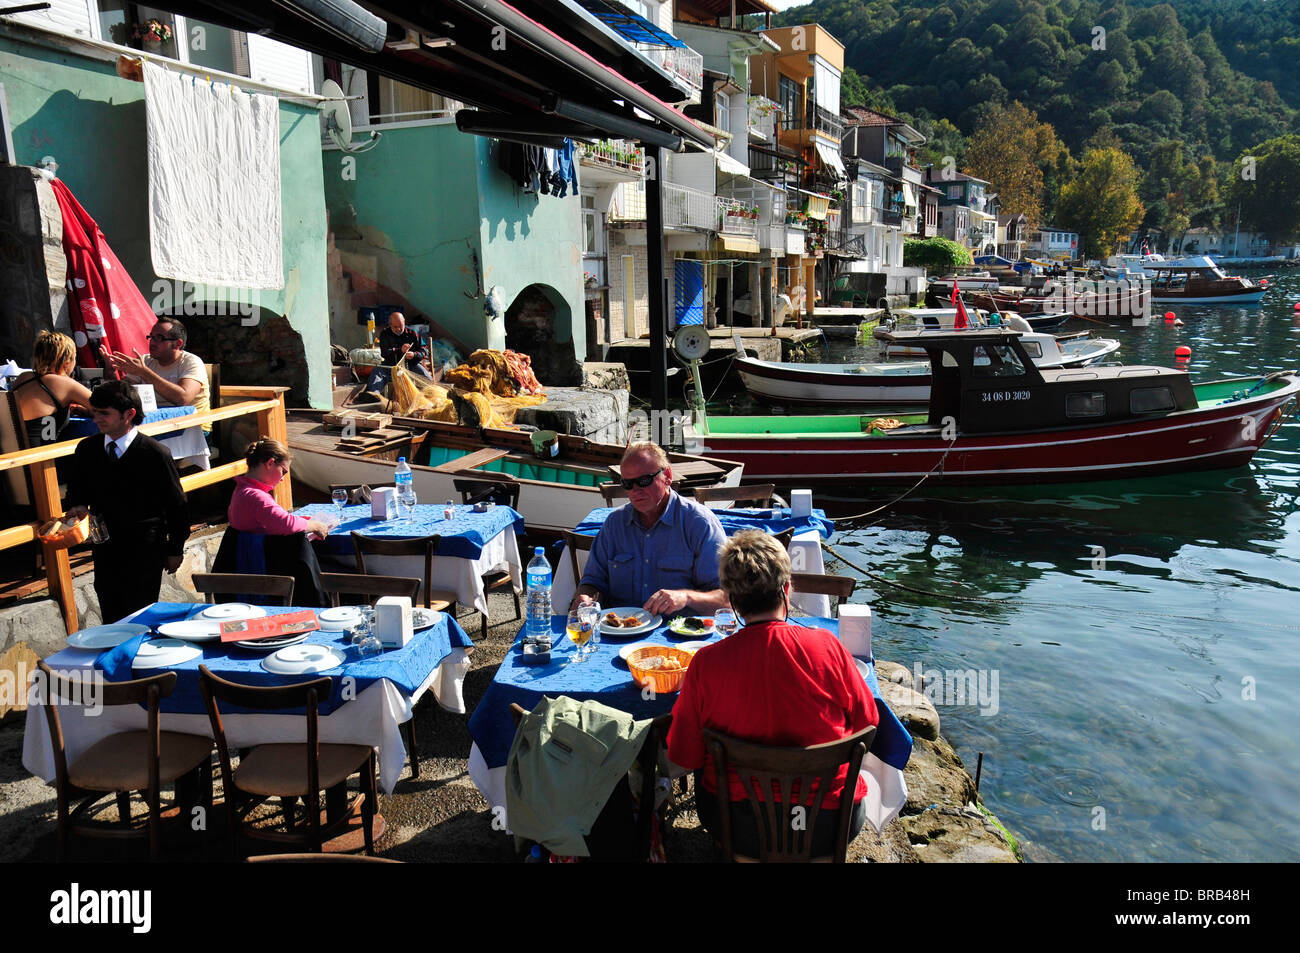 Restaurant in Anadolu Kavagi quay, small fishing and tourist village in the Bosporus Strait near the Black Sea. Turkey. Stock Photo